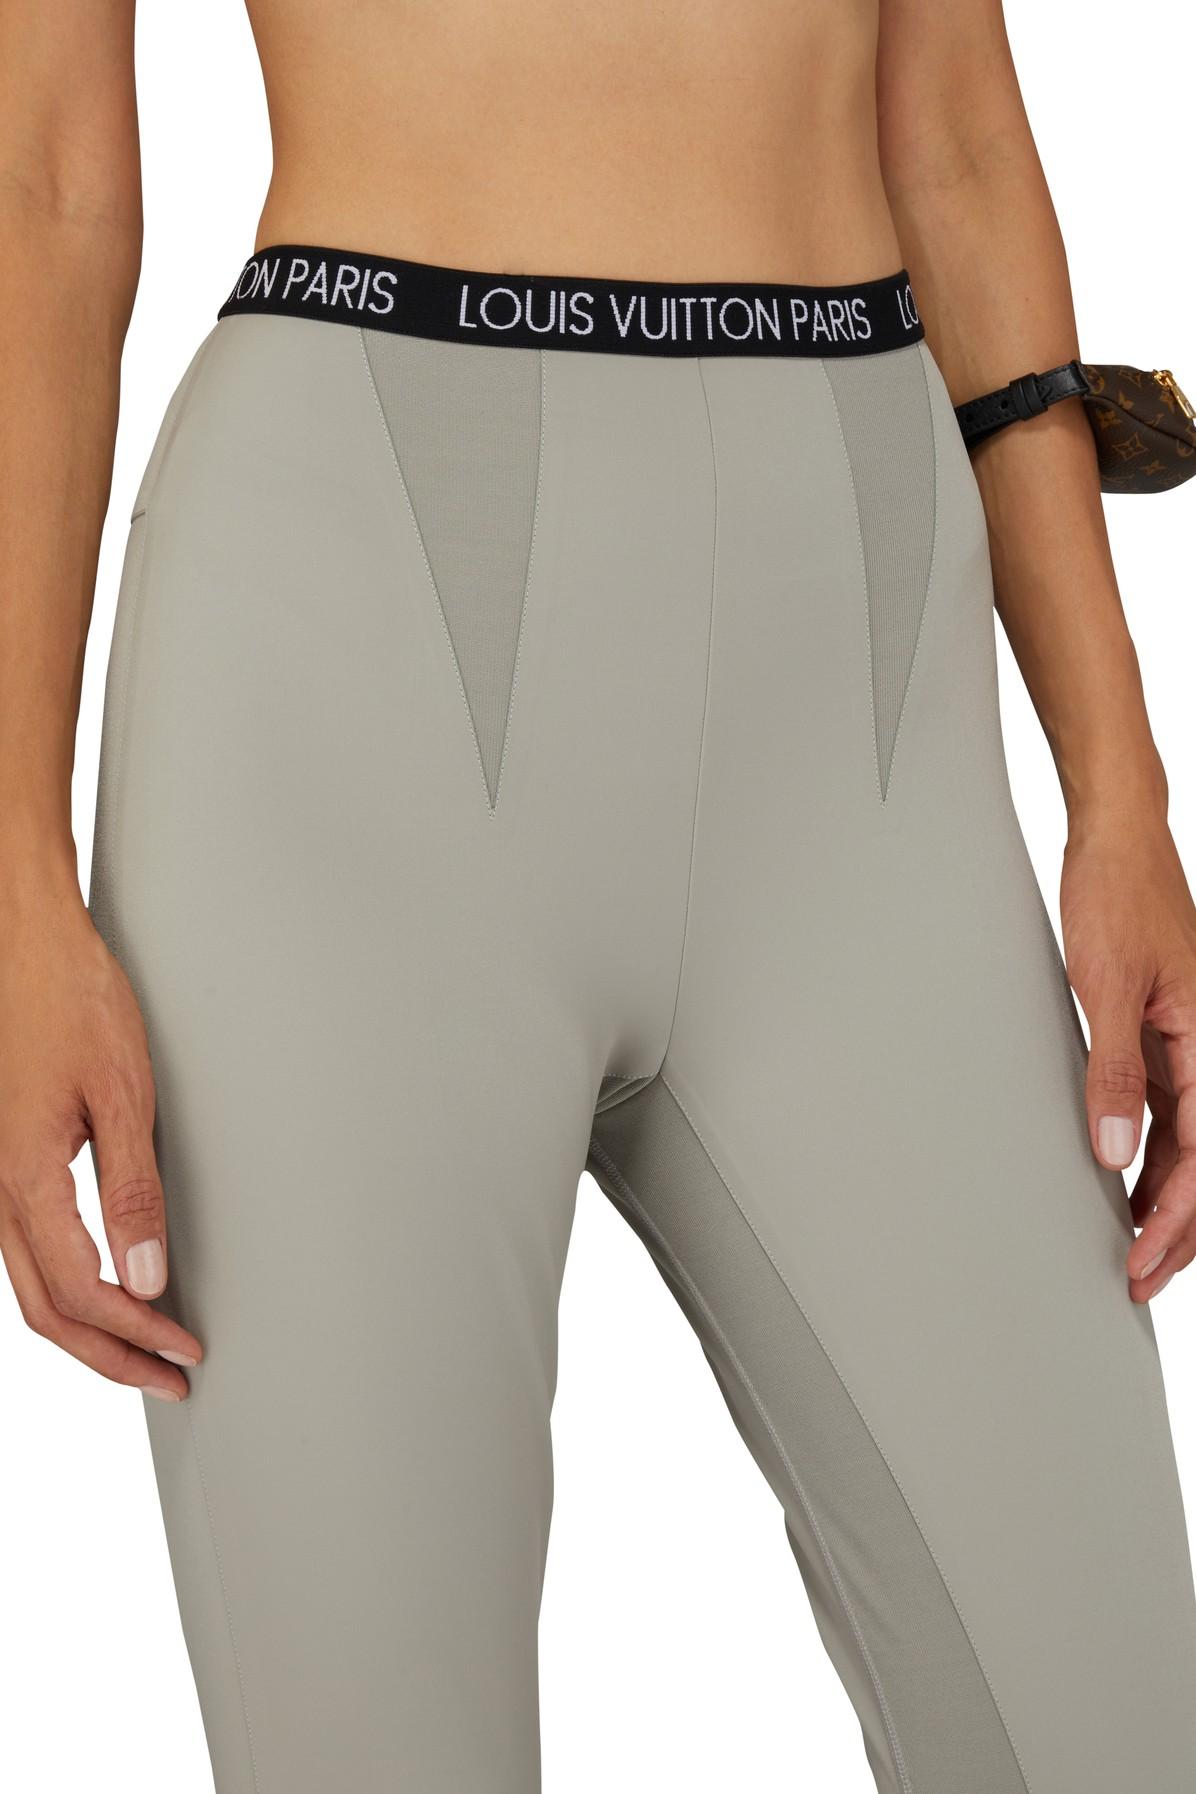 Louis Vuitton Shiny Insert Leggings in Gray | Lyst